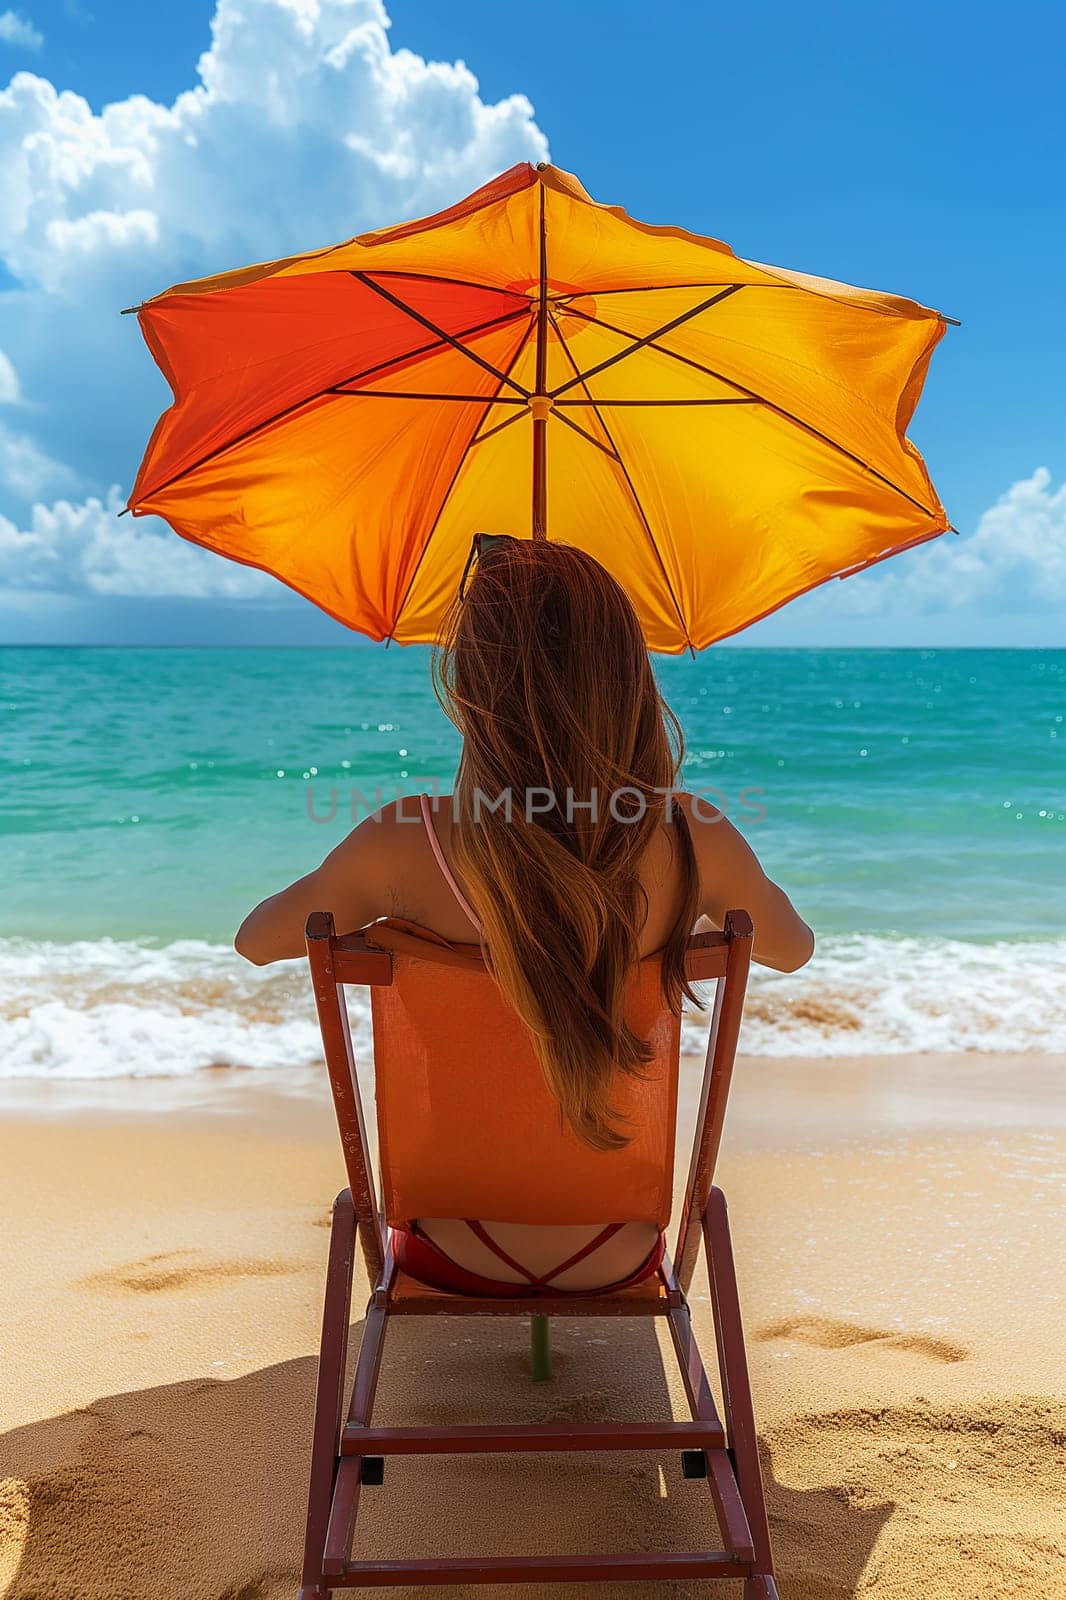 A woman relaxes under an umbrella on a sandy beach facing the ocean. by Hype2art